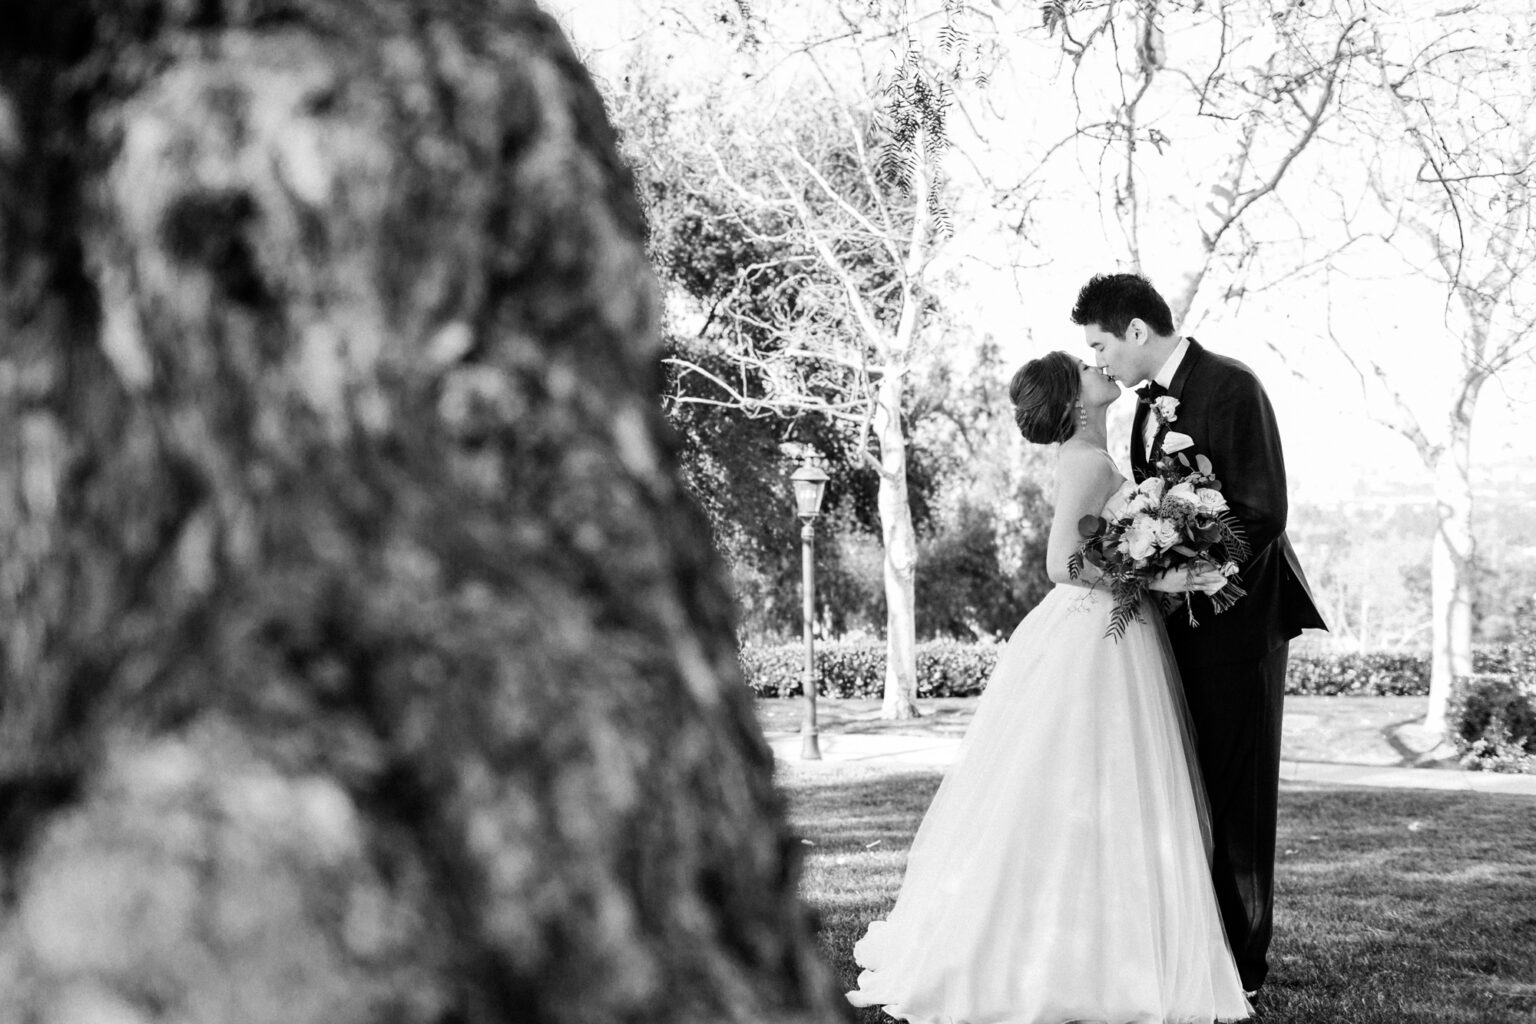 Summit House Fullerton Wedding Photography | Fullerton, California ...